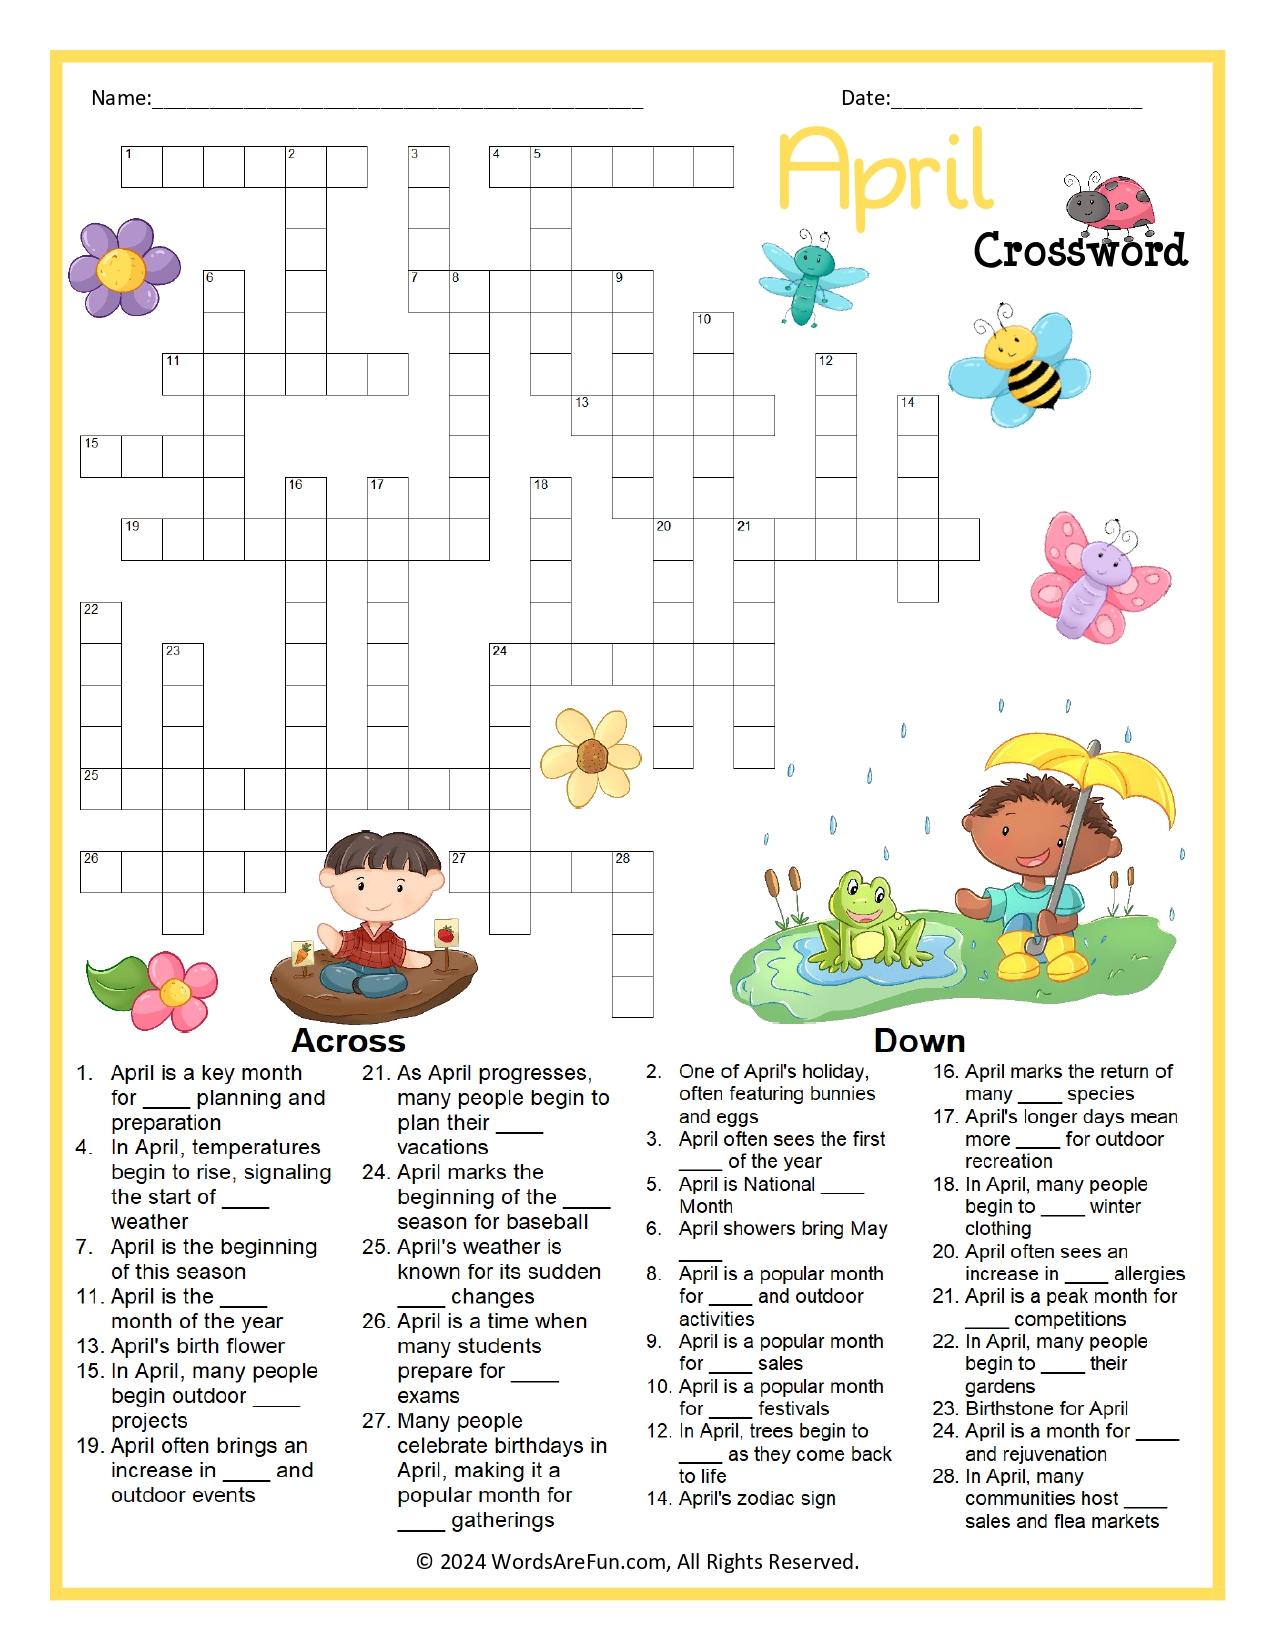 April Crossword Puzzle